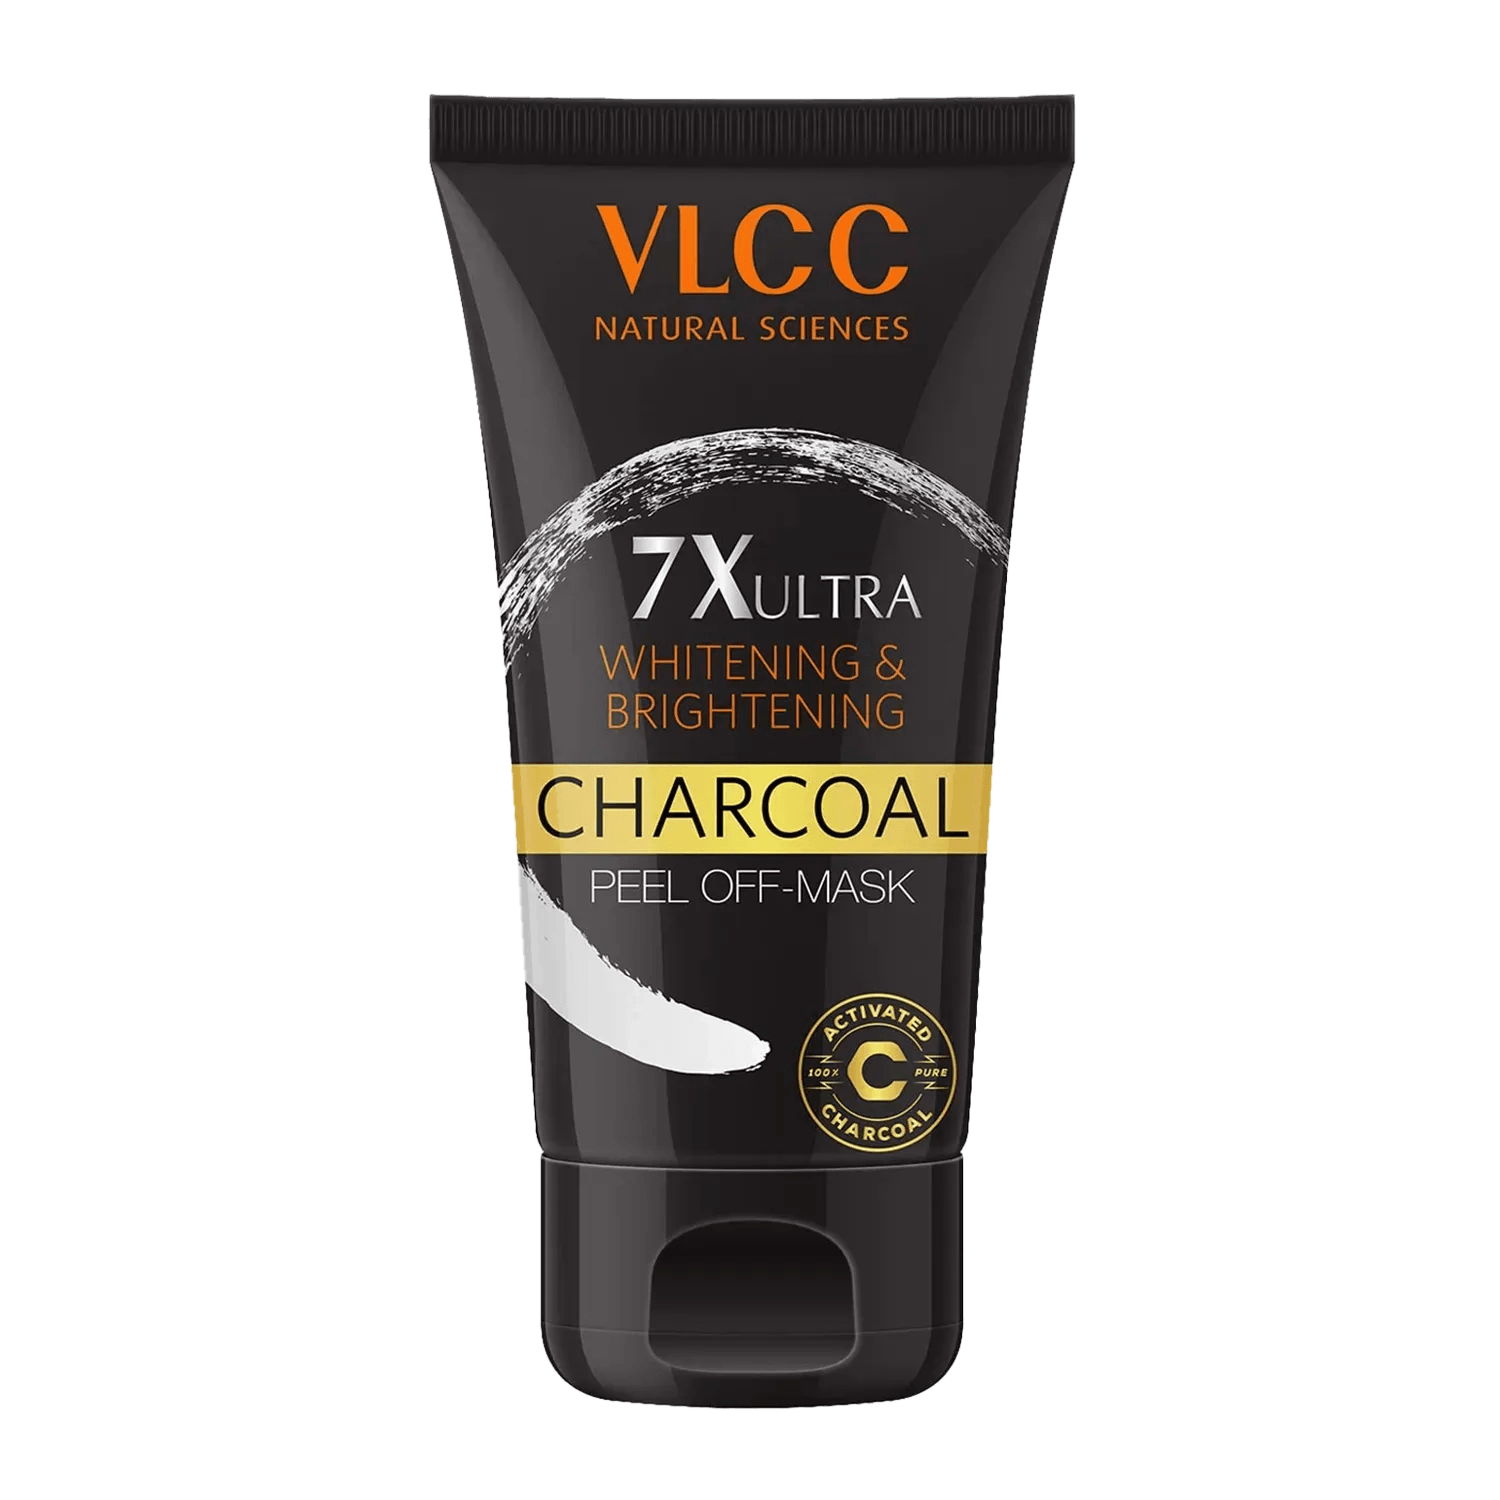 VLCC 7X Ultra Whitening & Brightening Charcoal Peel Off Mask (100g)